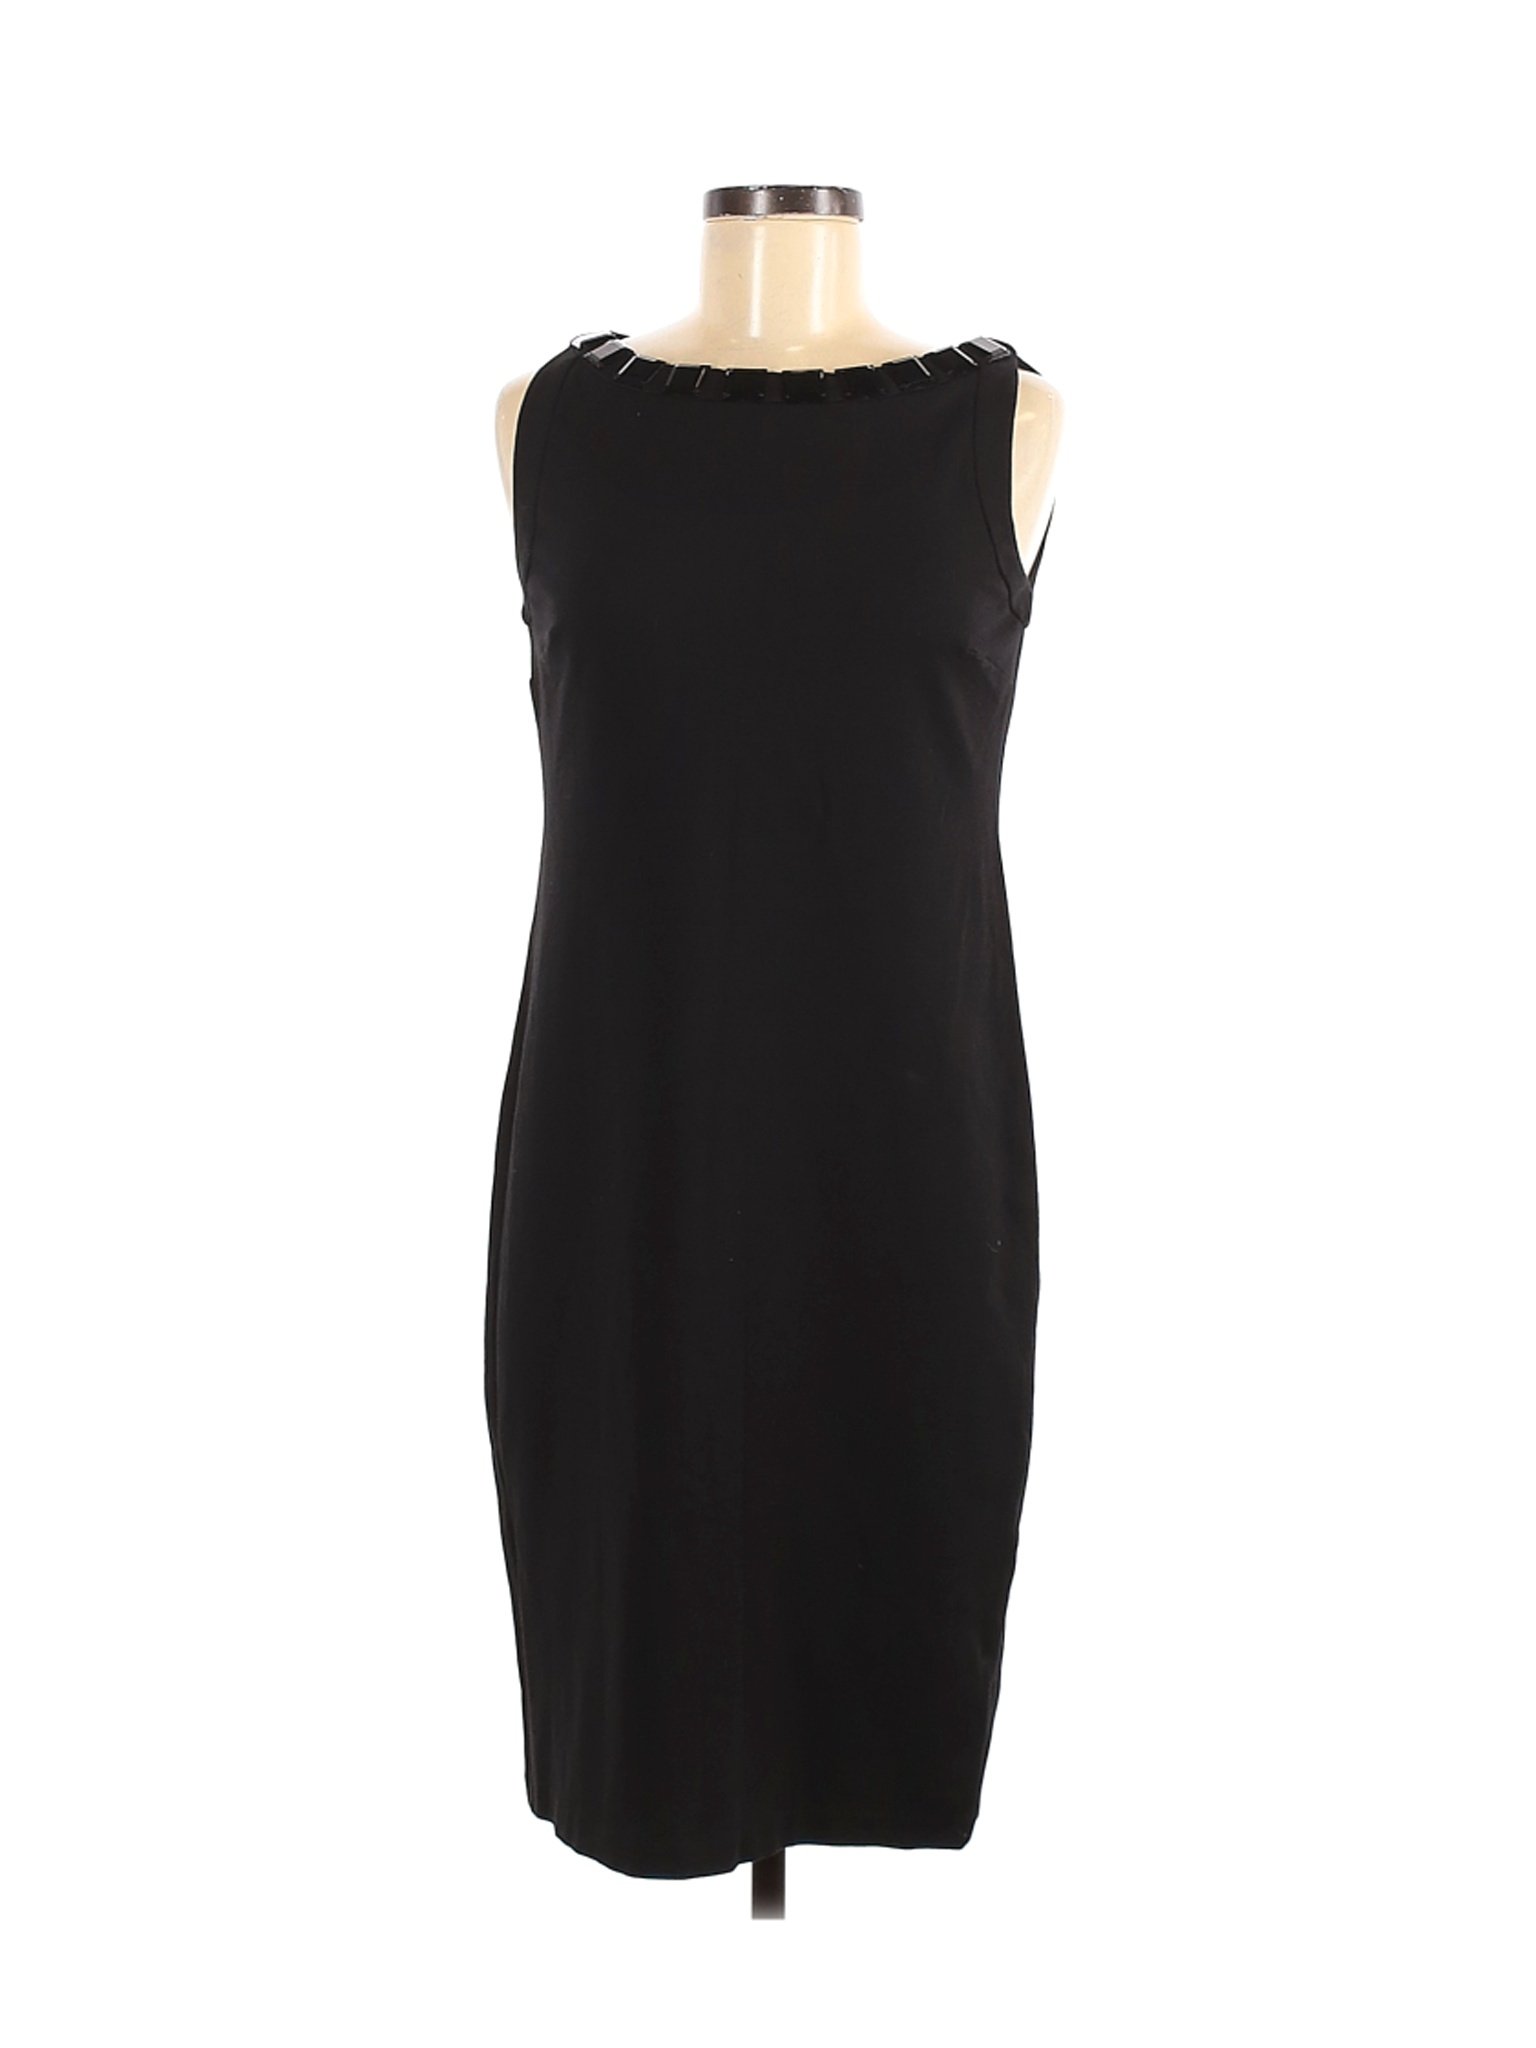 Talbots Women Black Cocktail Dress 6 | eBay